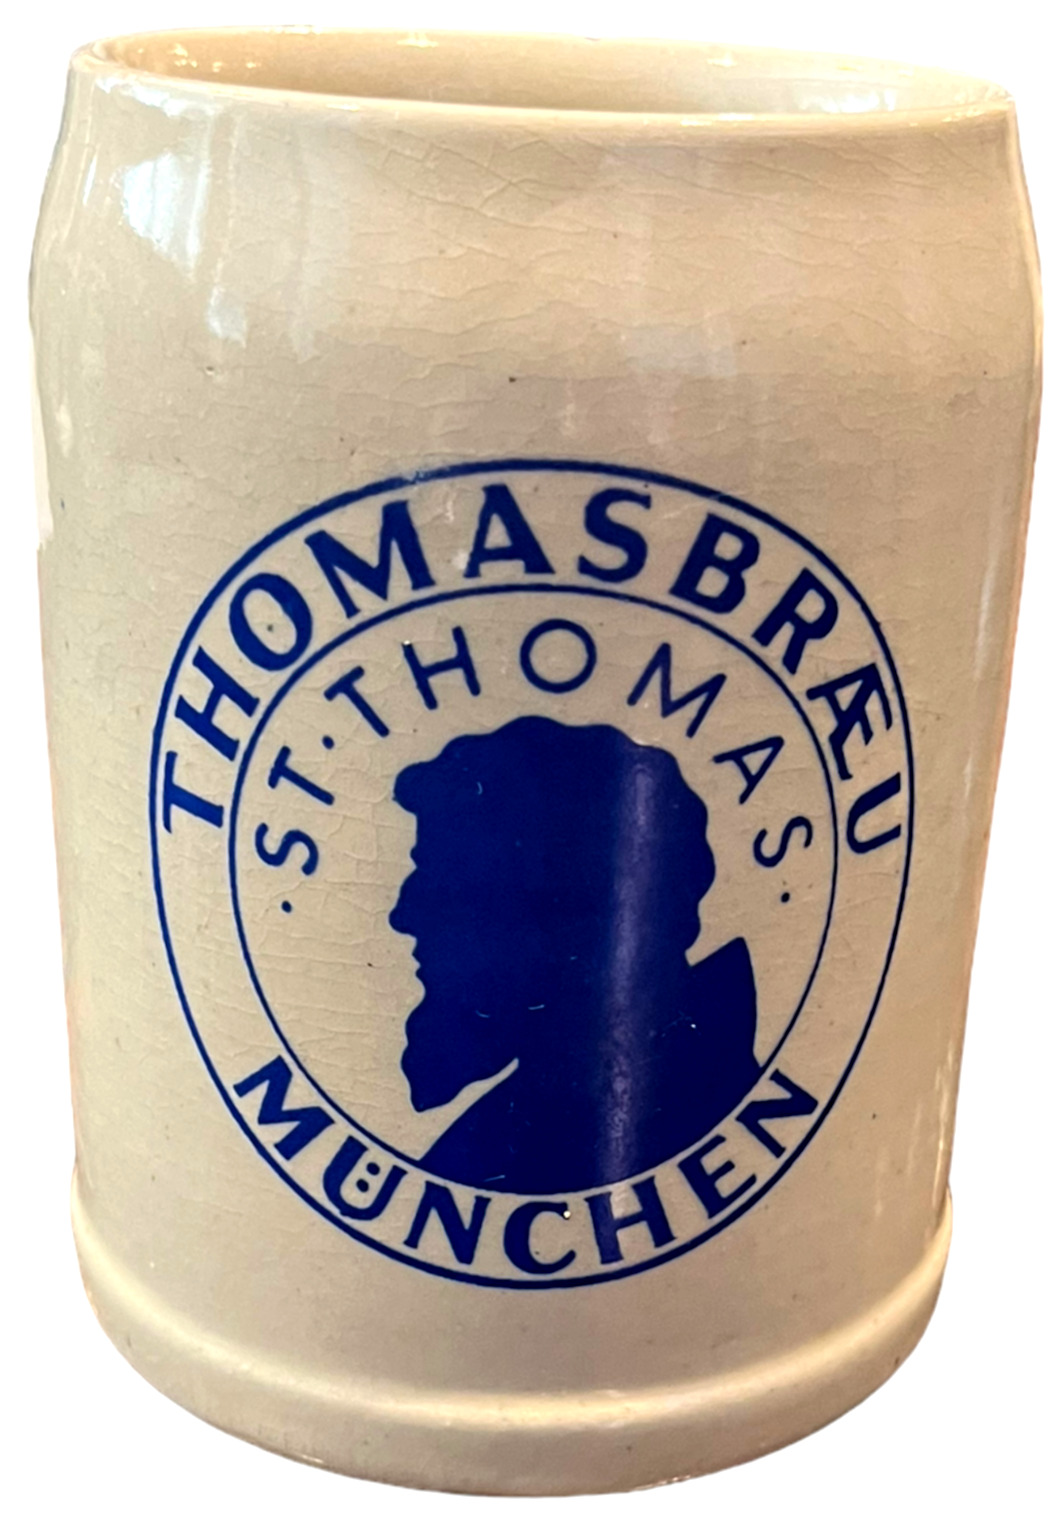 THOMASBRAEU St. Thomas MUNCHEN 0.5 Liter Beer Stein Mug - Ceramic Beer Mug